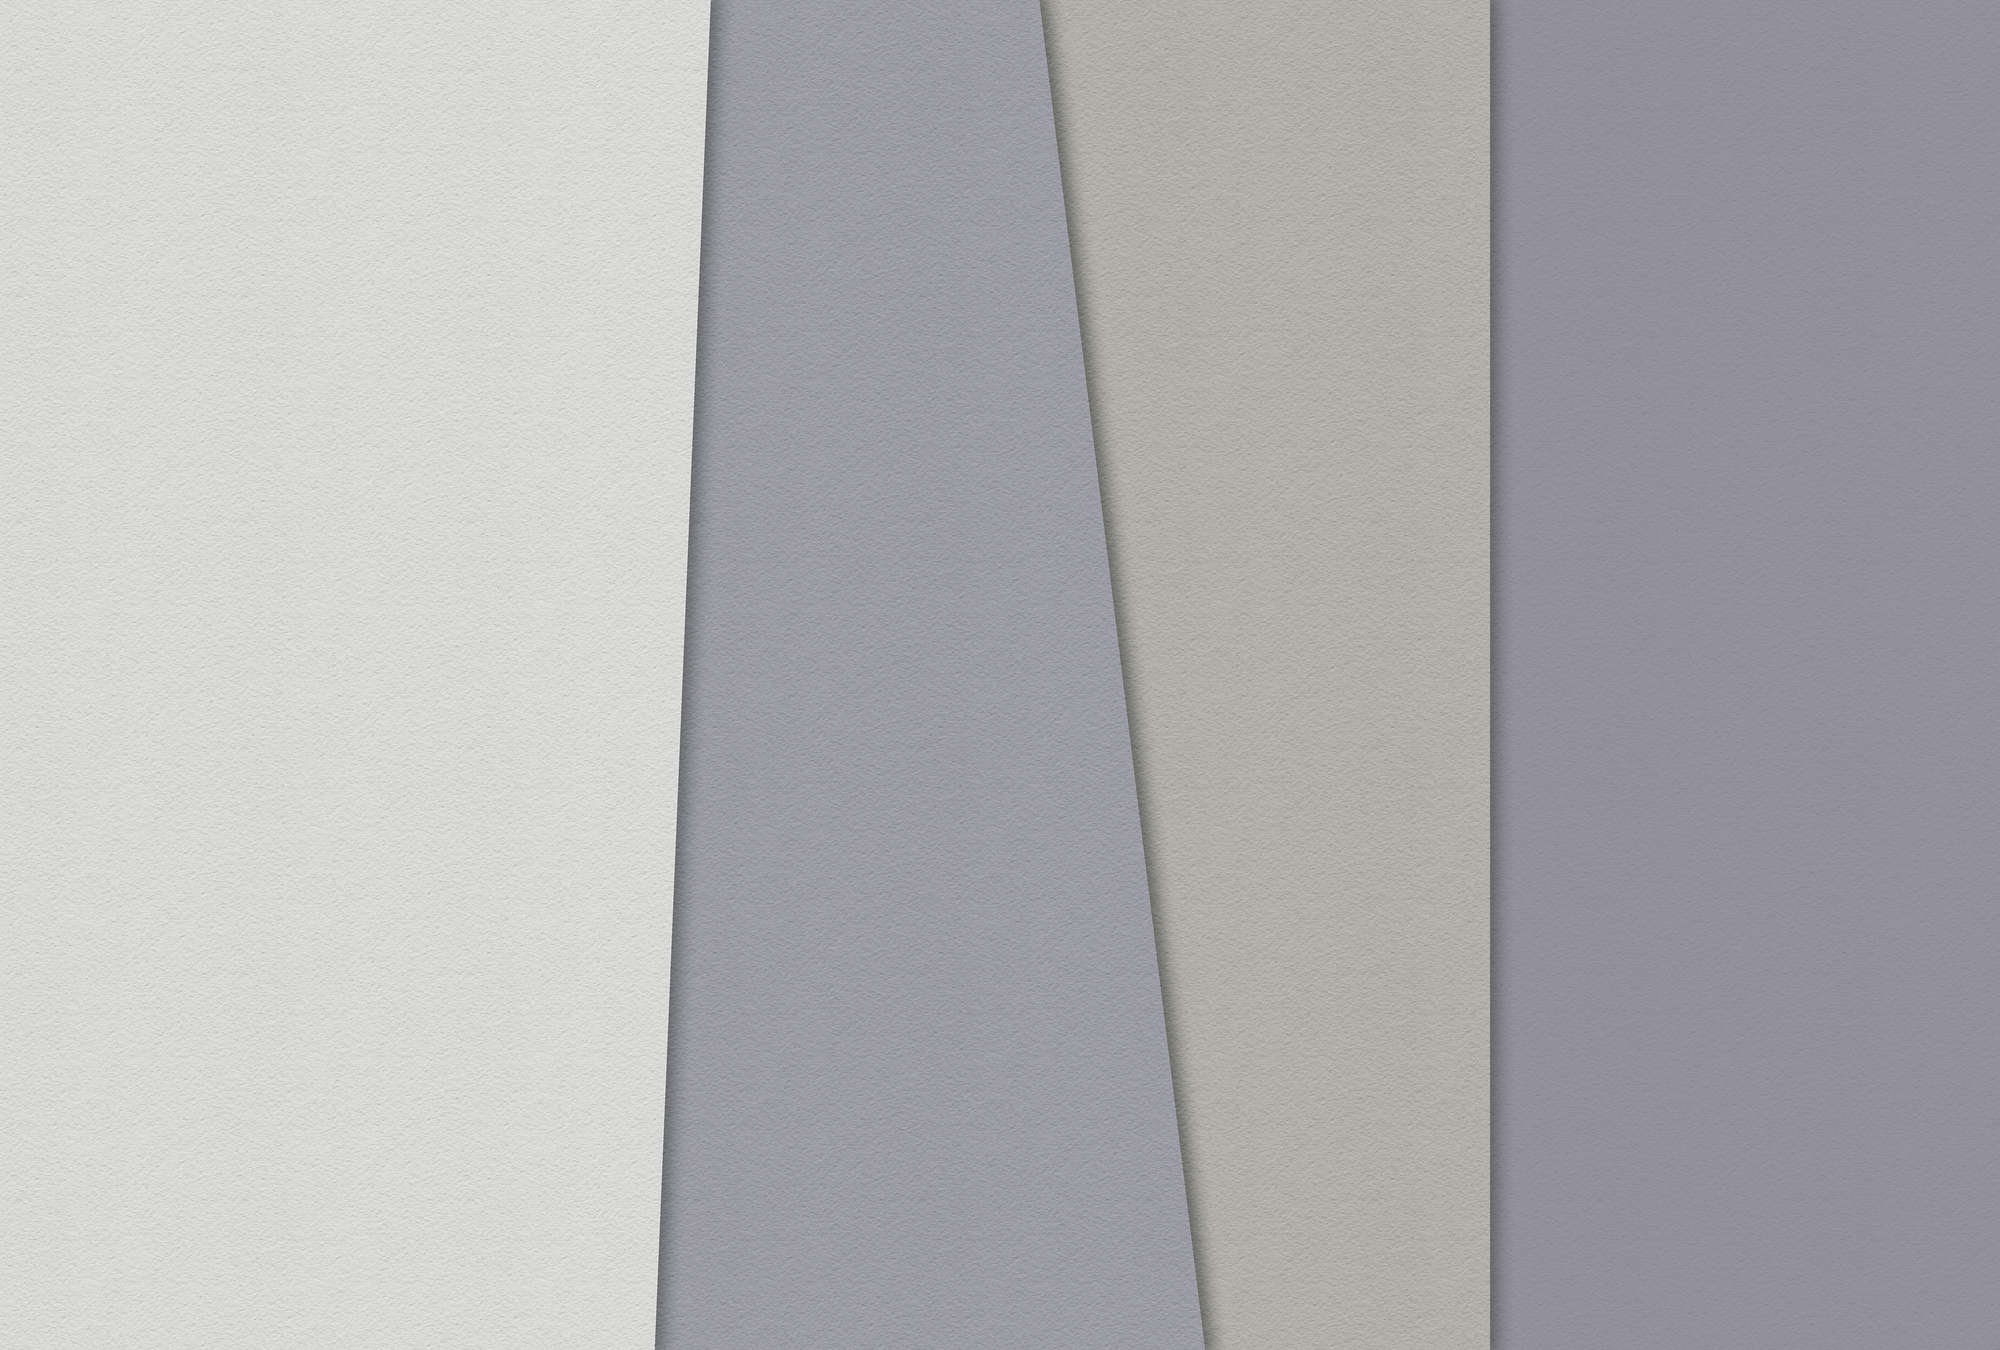             Layered paper 2 - Graphic wallpaper, handmade paper structure minimalist design - cream, green | pearl smooth fleece
        